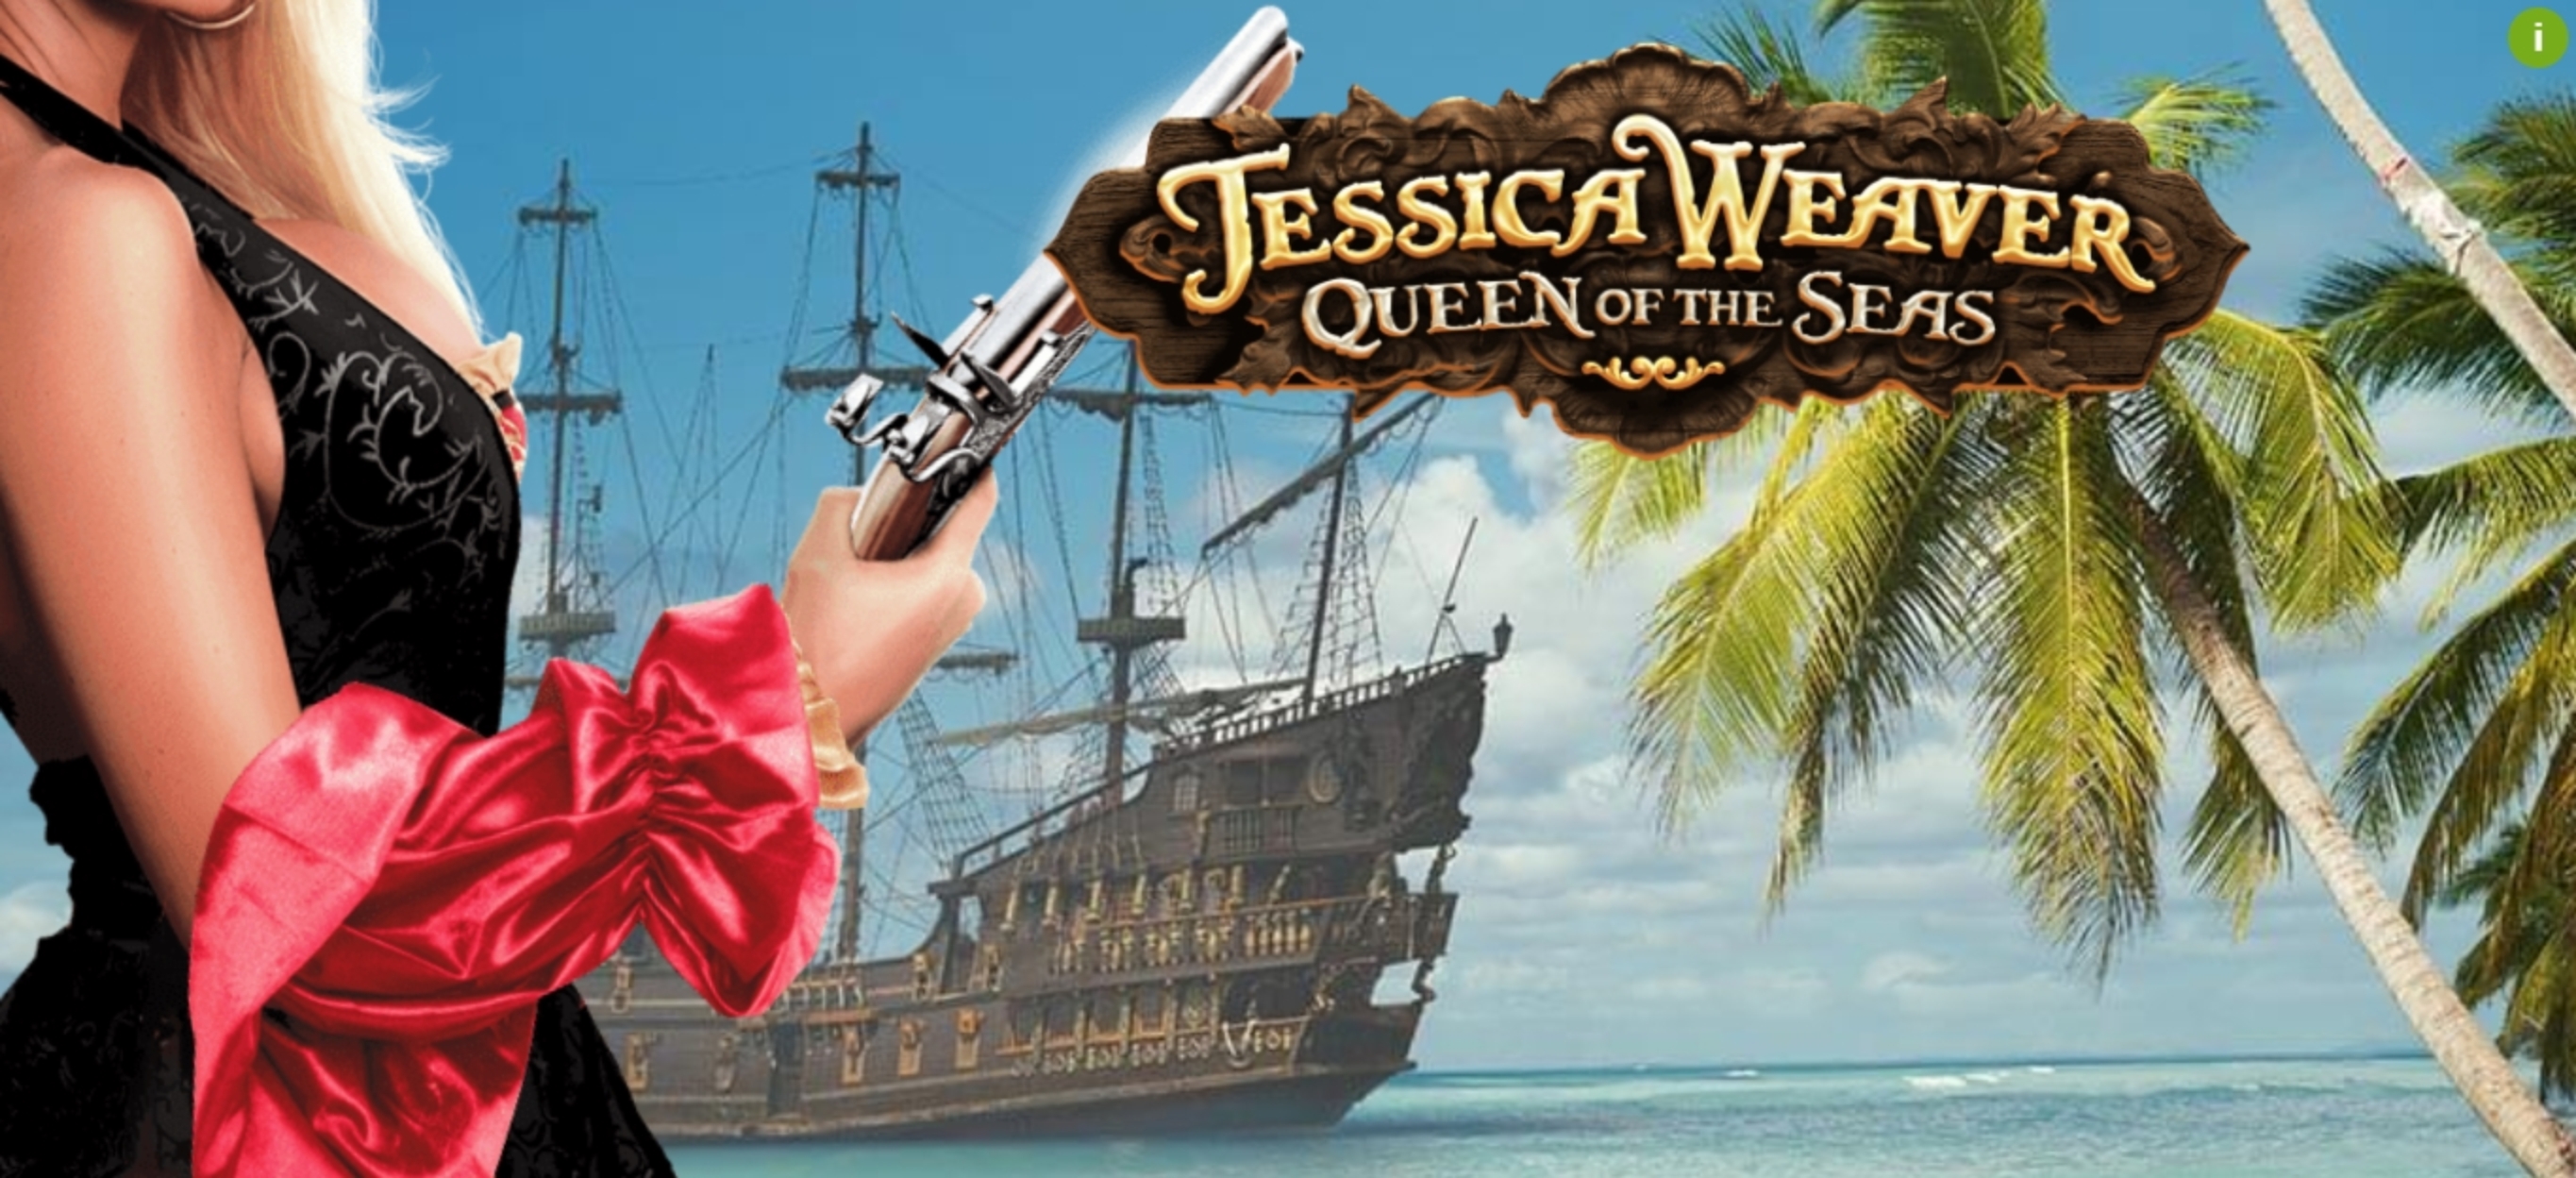 Jessica Weaver Queen of the Seas demo